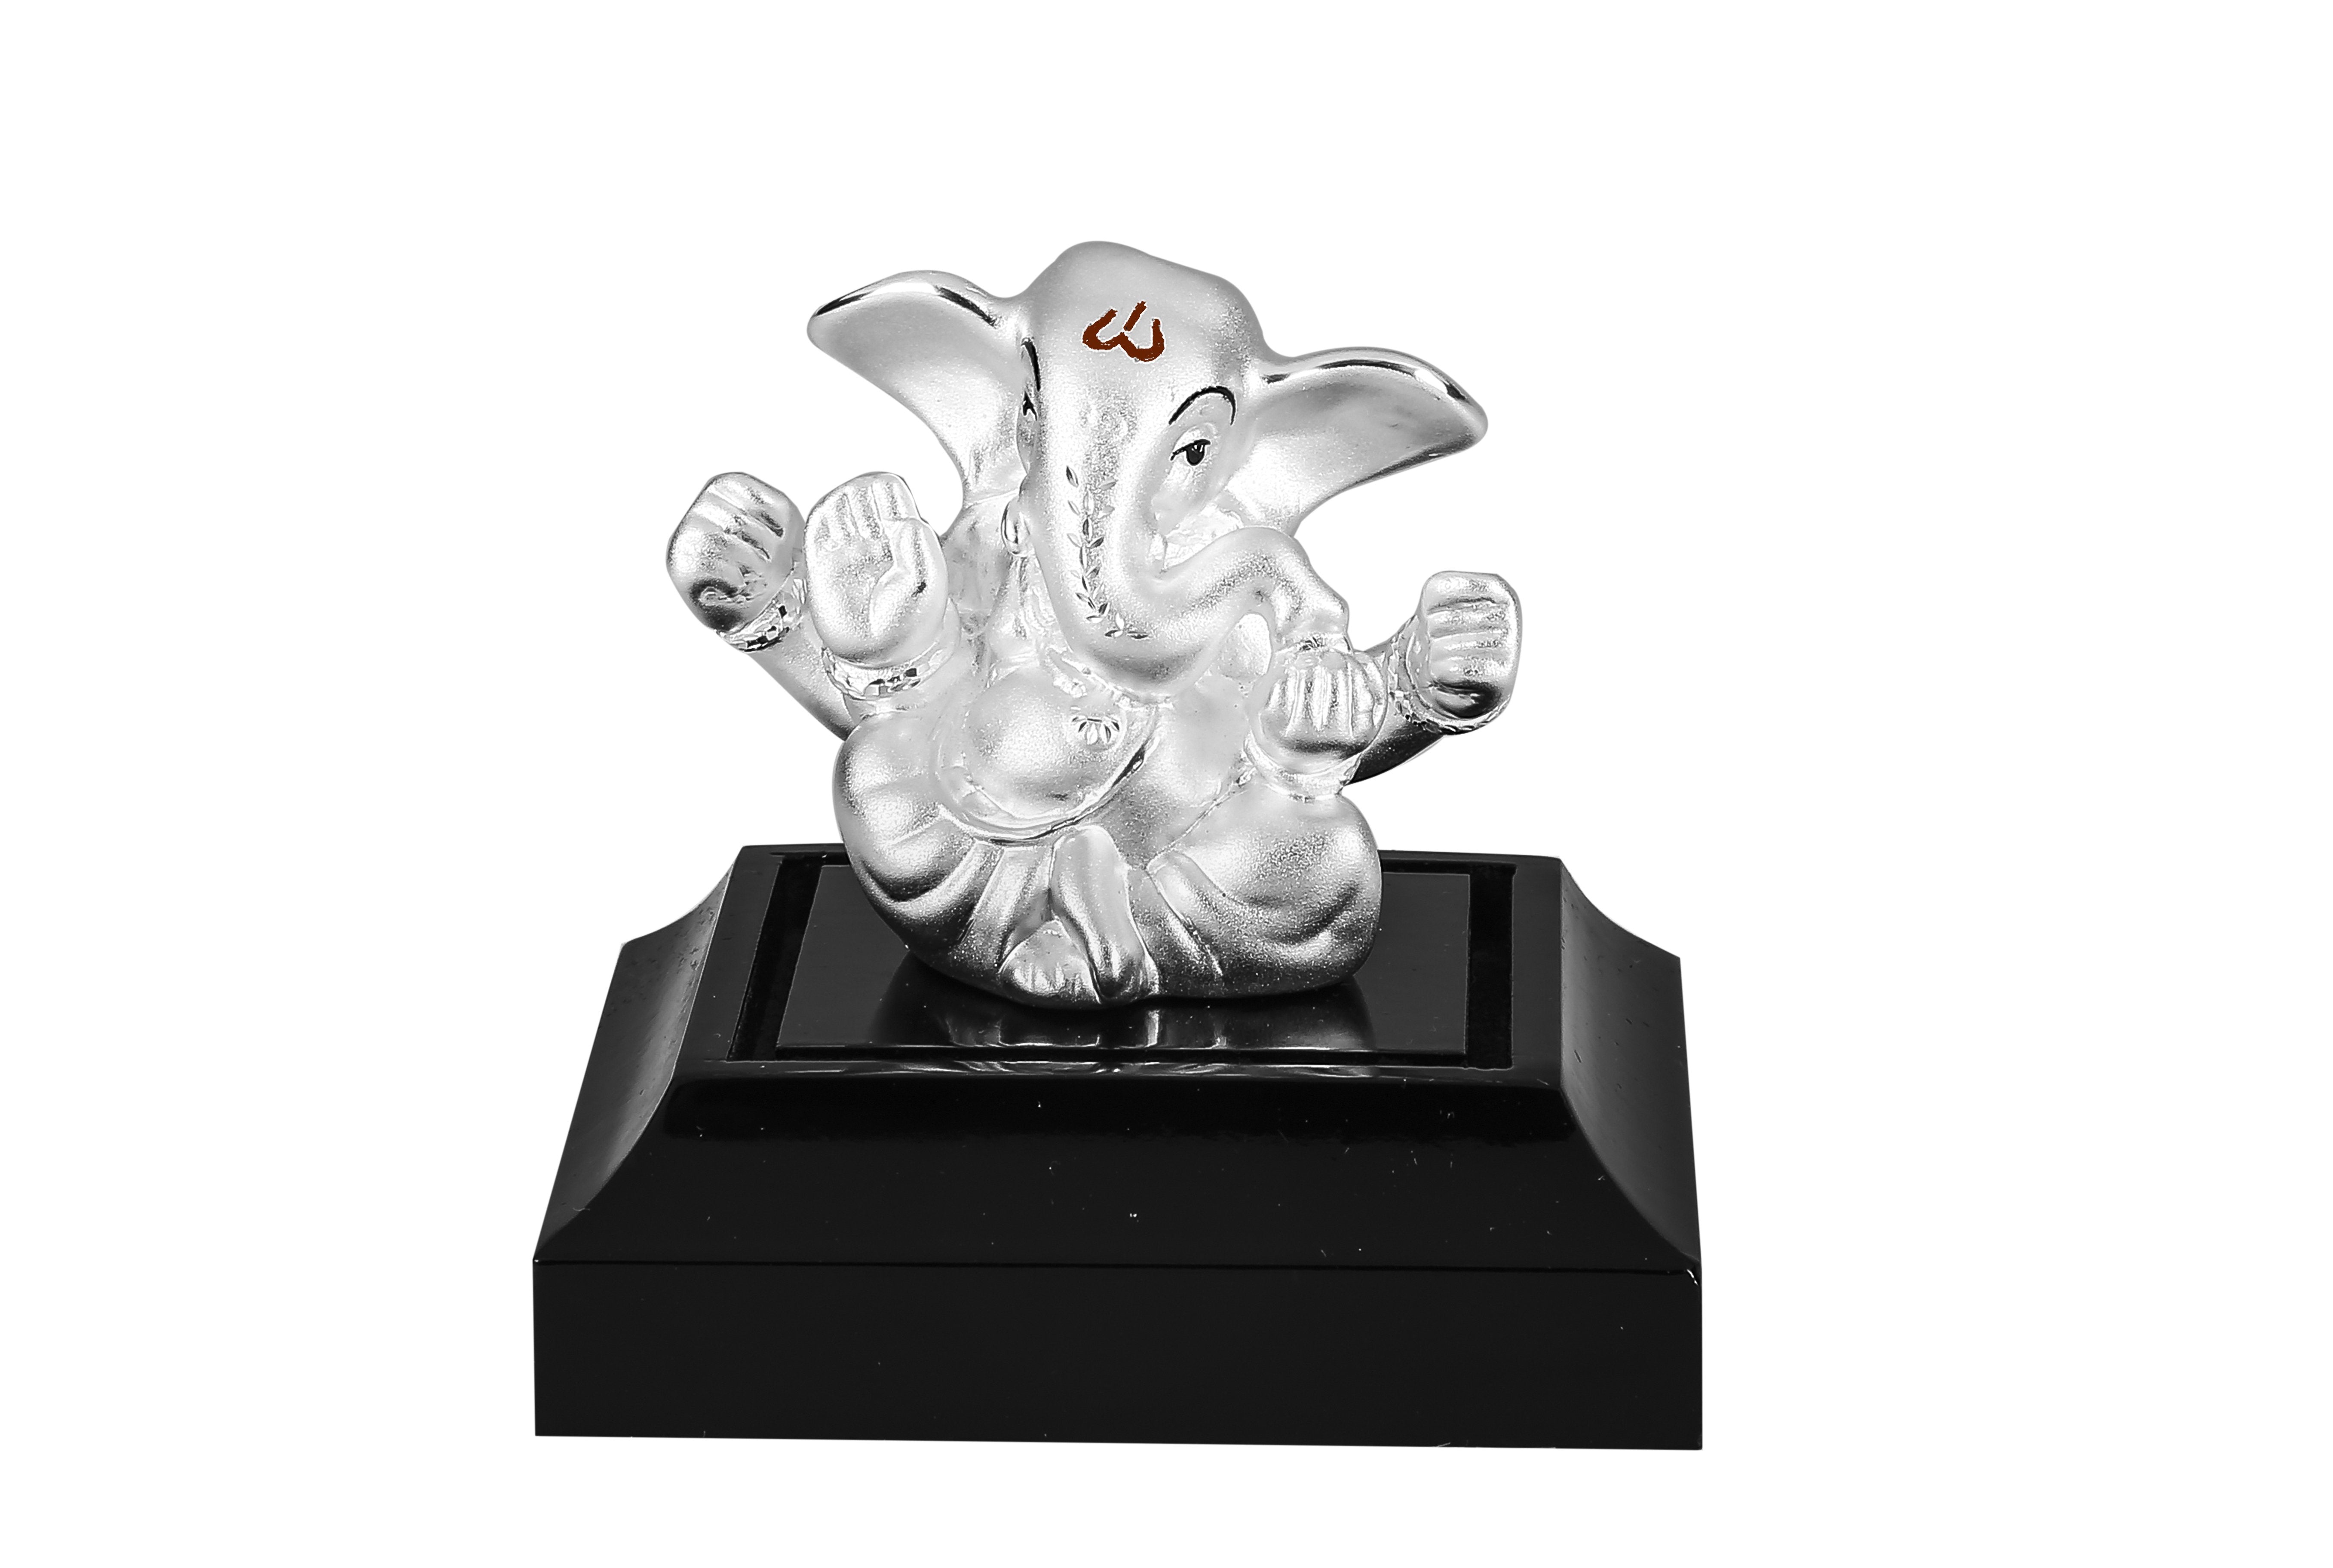 999 Pure Silver Ganesha Idol By Krysaliis Isvara - Krign_11 Idols